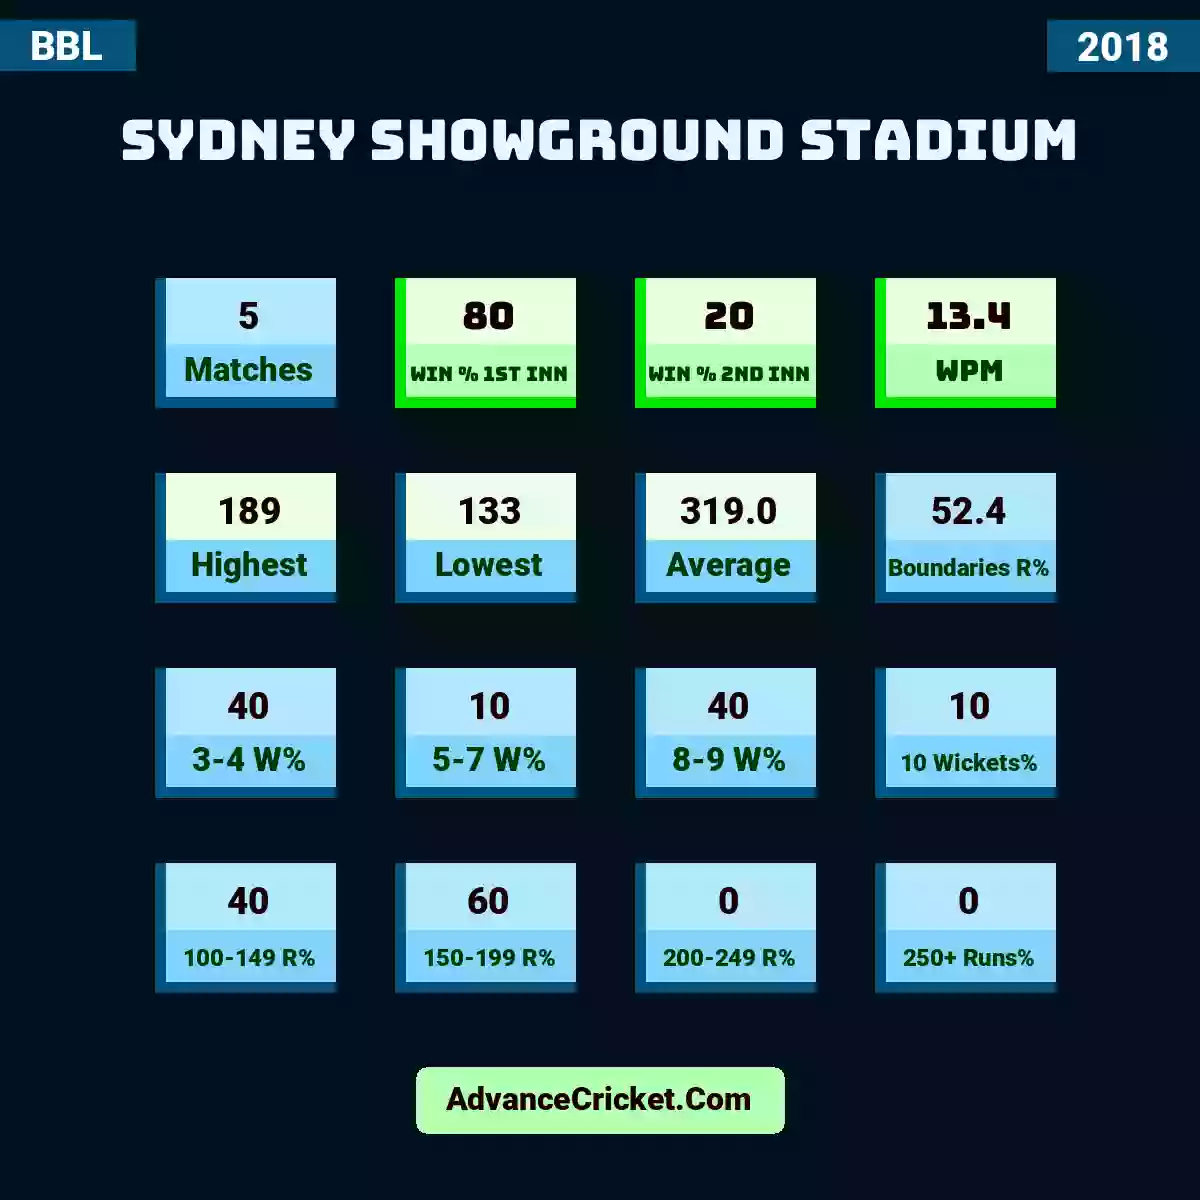 Image showing Sydney Showground Stadium with Matches: 5, Win % 1st Inn: 80, Win % 2nd Inn: 20, WPM: 13.4, Highest: 189, Lowest: 133, Average: 319.0, Boundaries R%: 52.4, 3-4 W%: 40, 5-7 W%: 10, 8-9 W%: 40, 10 Wickets%: 10, 100-149 R%: 40, 150-199 R%: 60, 200-249 R%: 0, 250+ Runs%: 0.